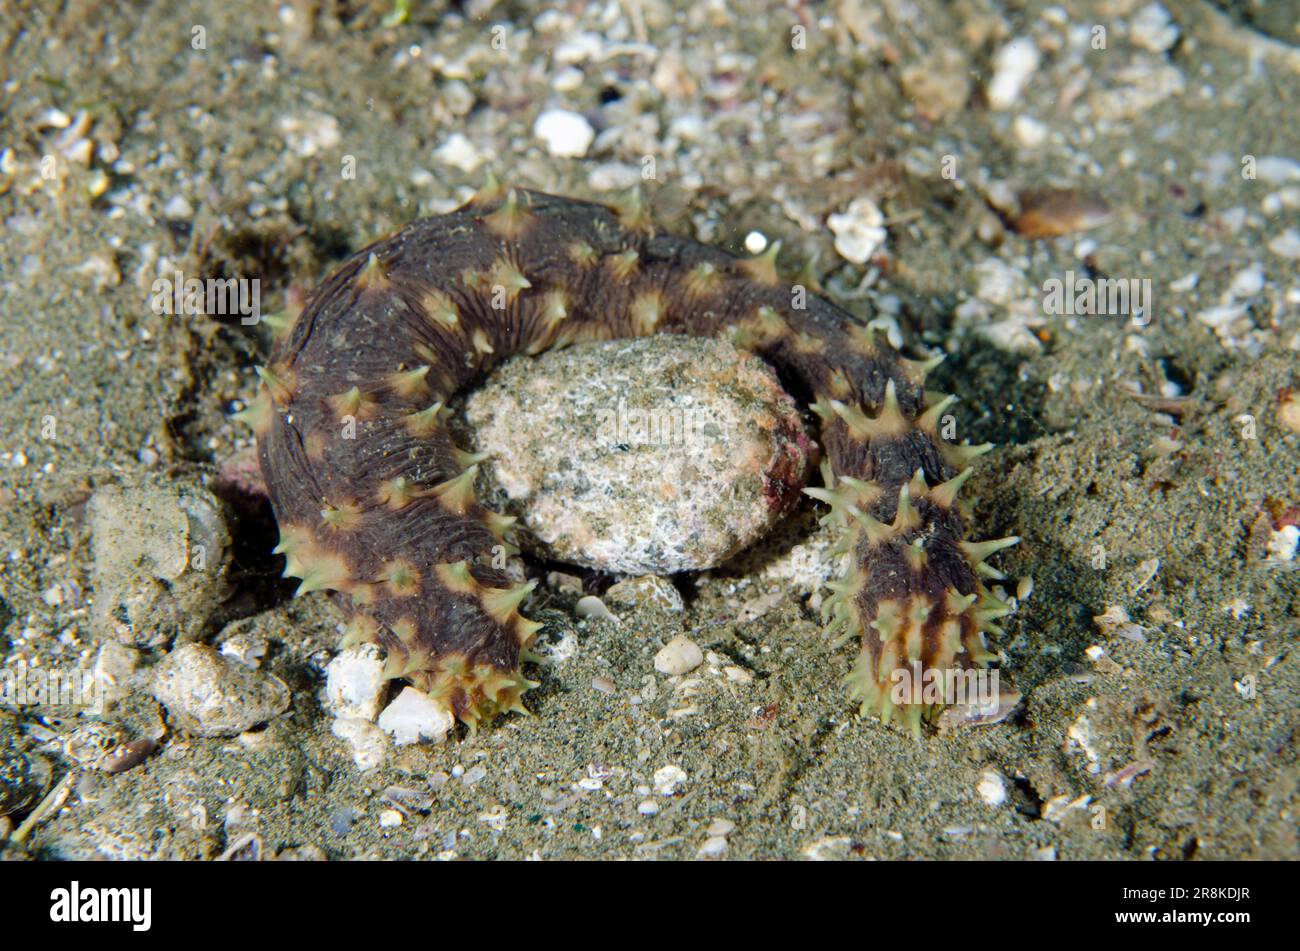 Tigertail Sea Cucumber, Holothuria hilla, Kampung Baru dive site, Ambon, Maluku, Indonesia, Banda Sea Stock Photo